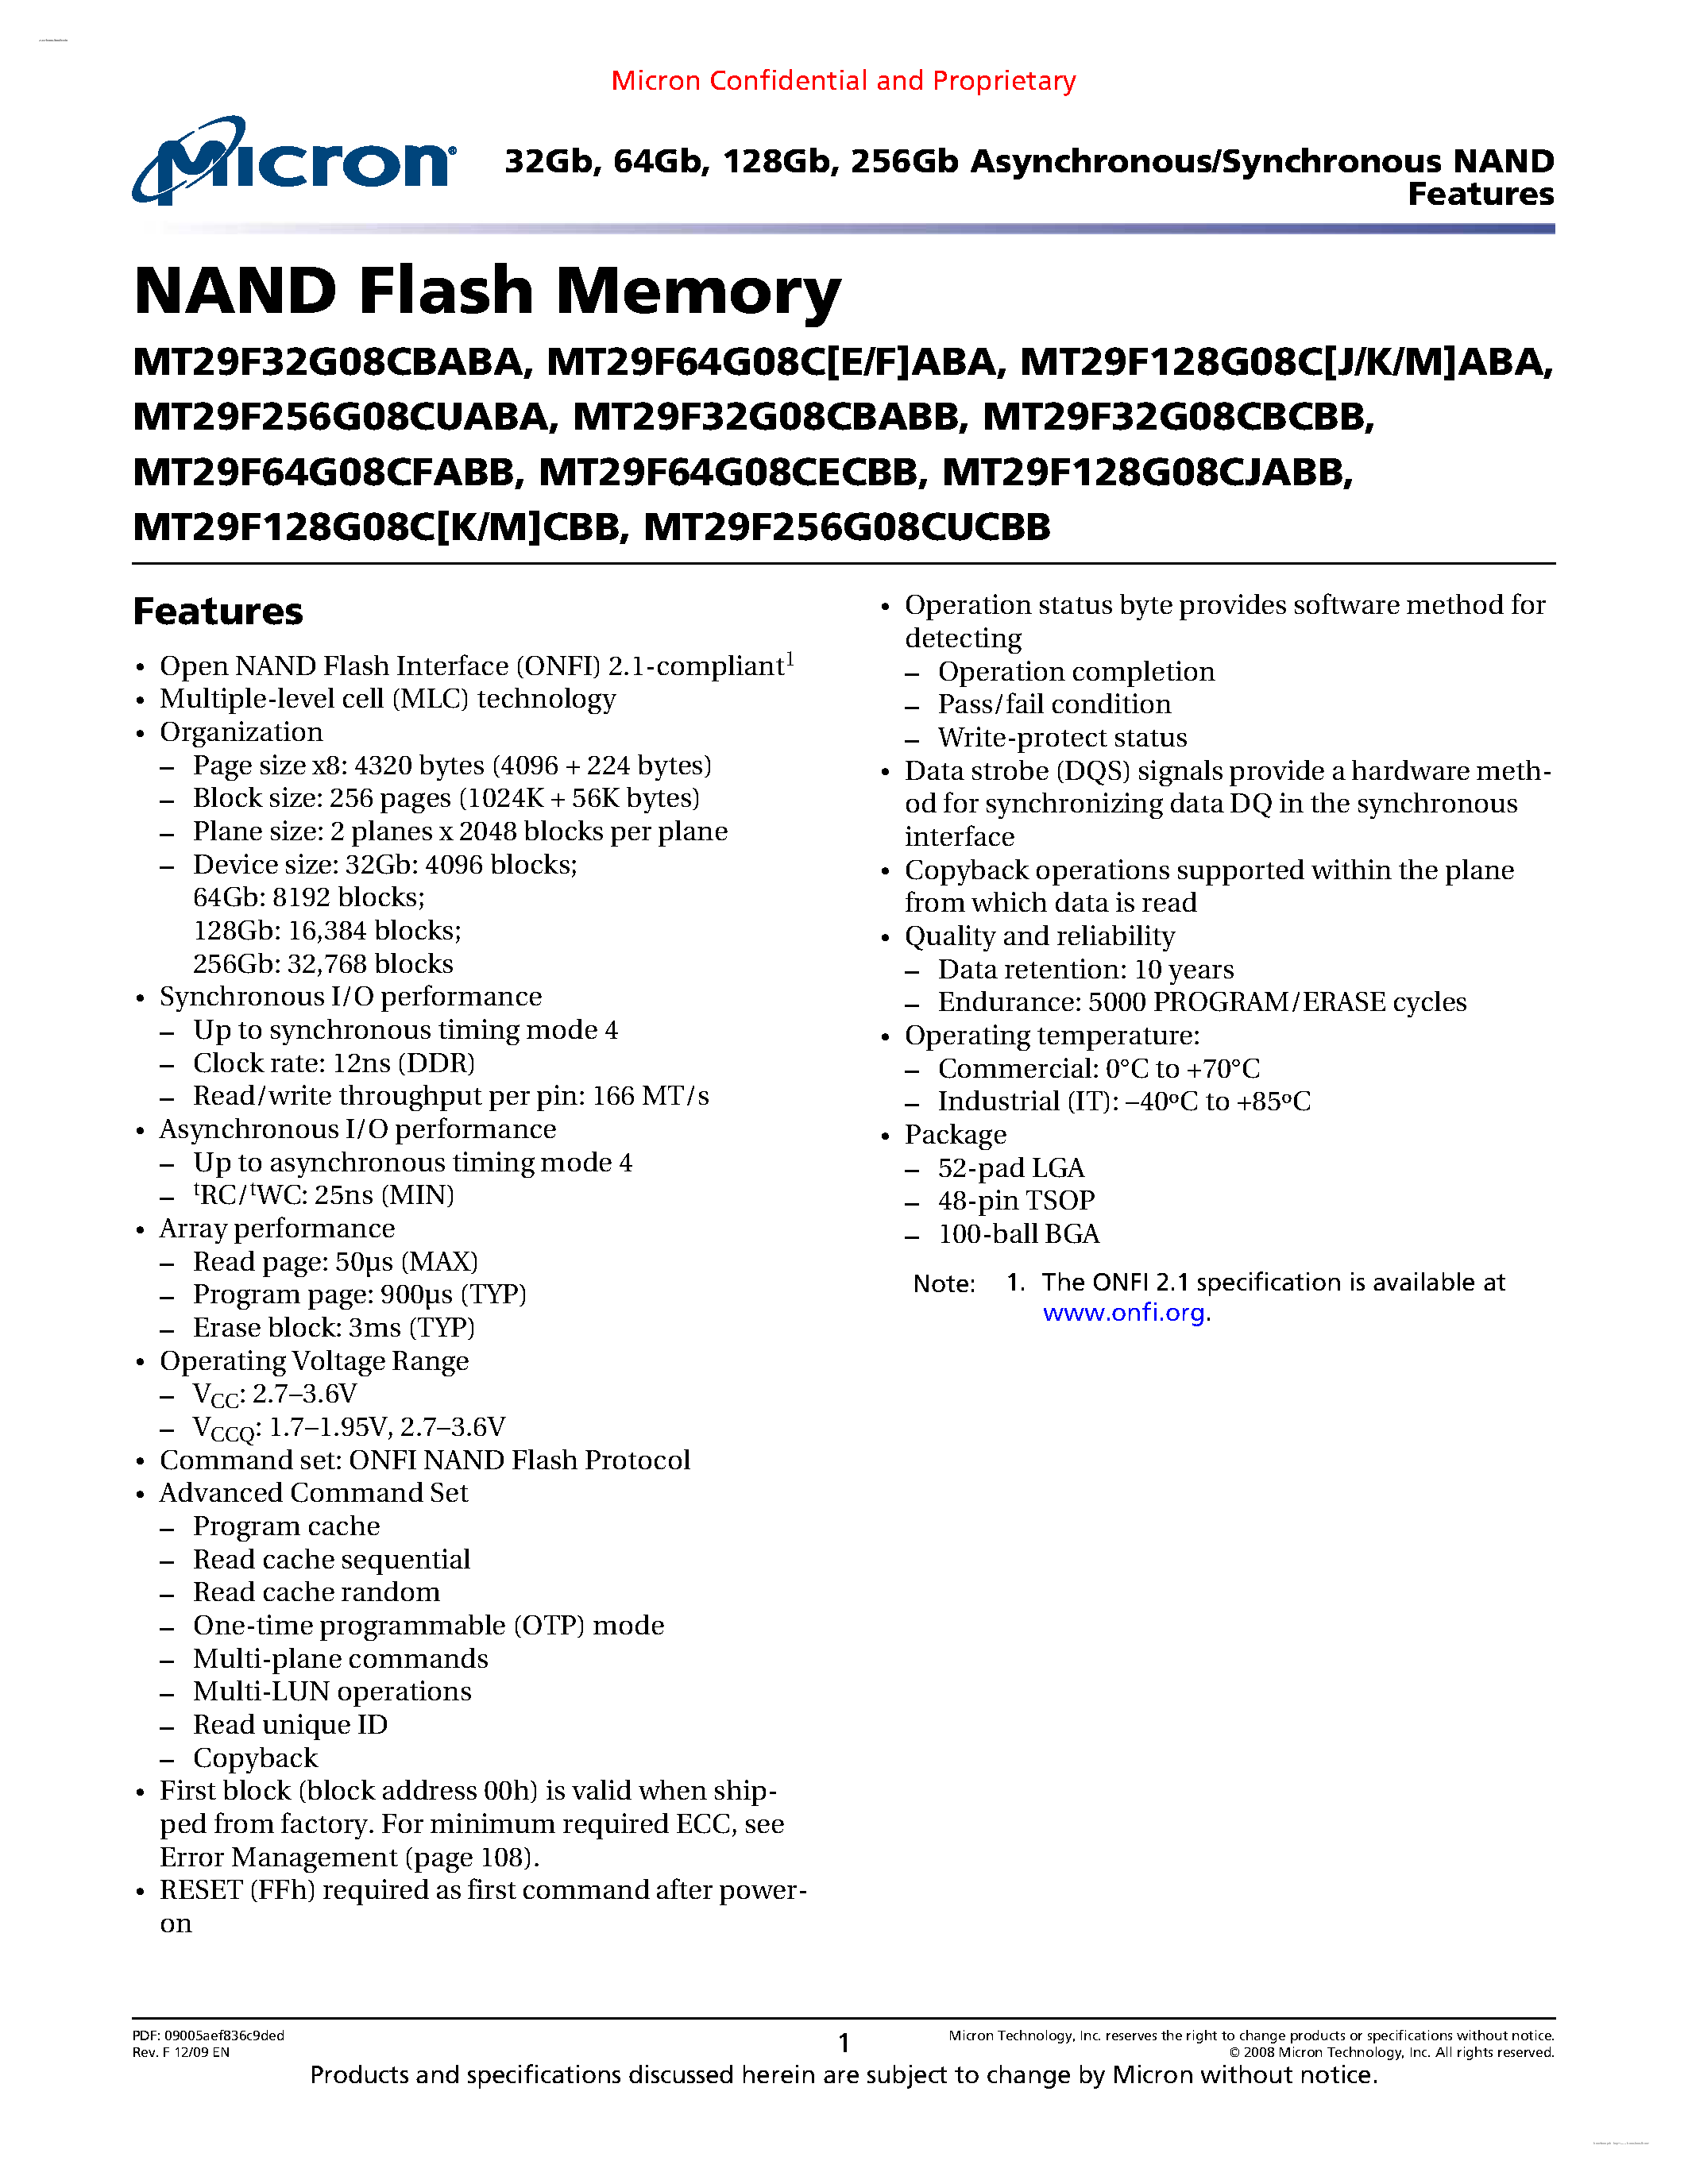 Datasheet 29F32G08C - NAND Flash Memory page 1